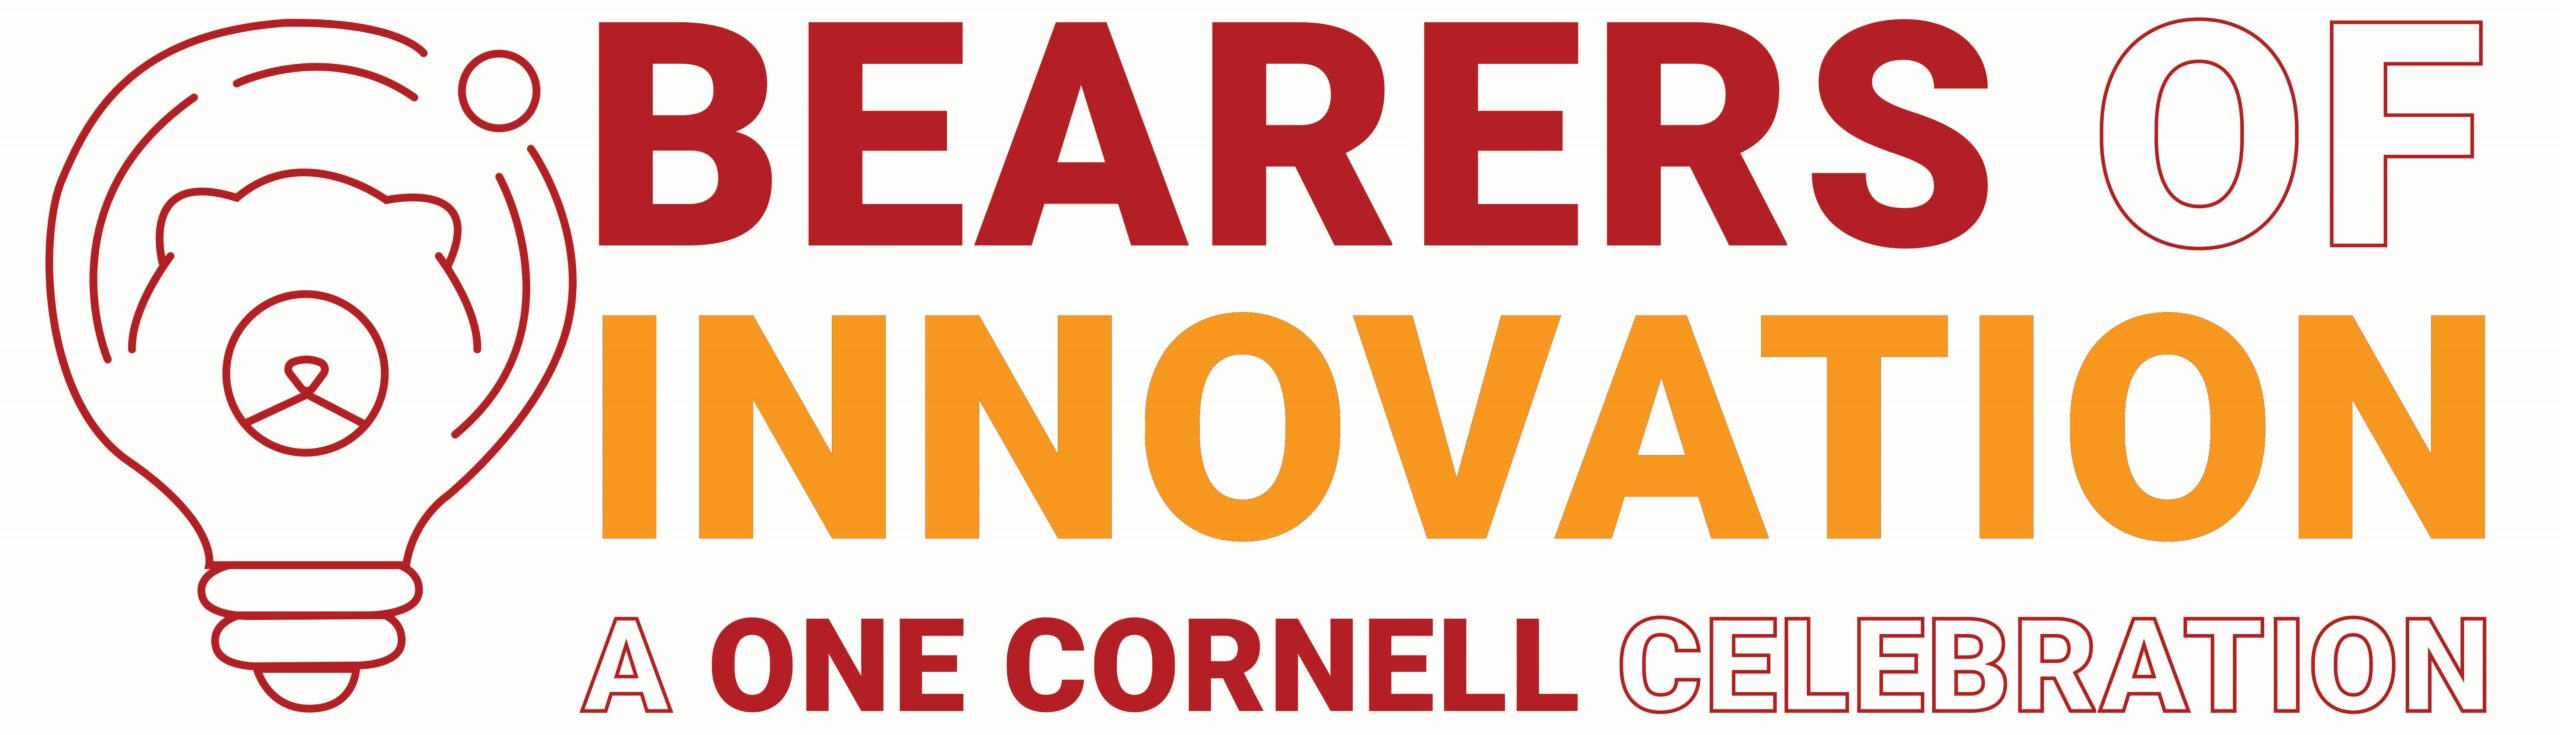 Bearers of Innovation logo